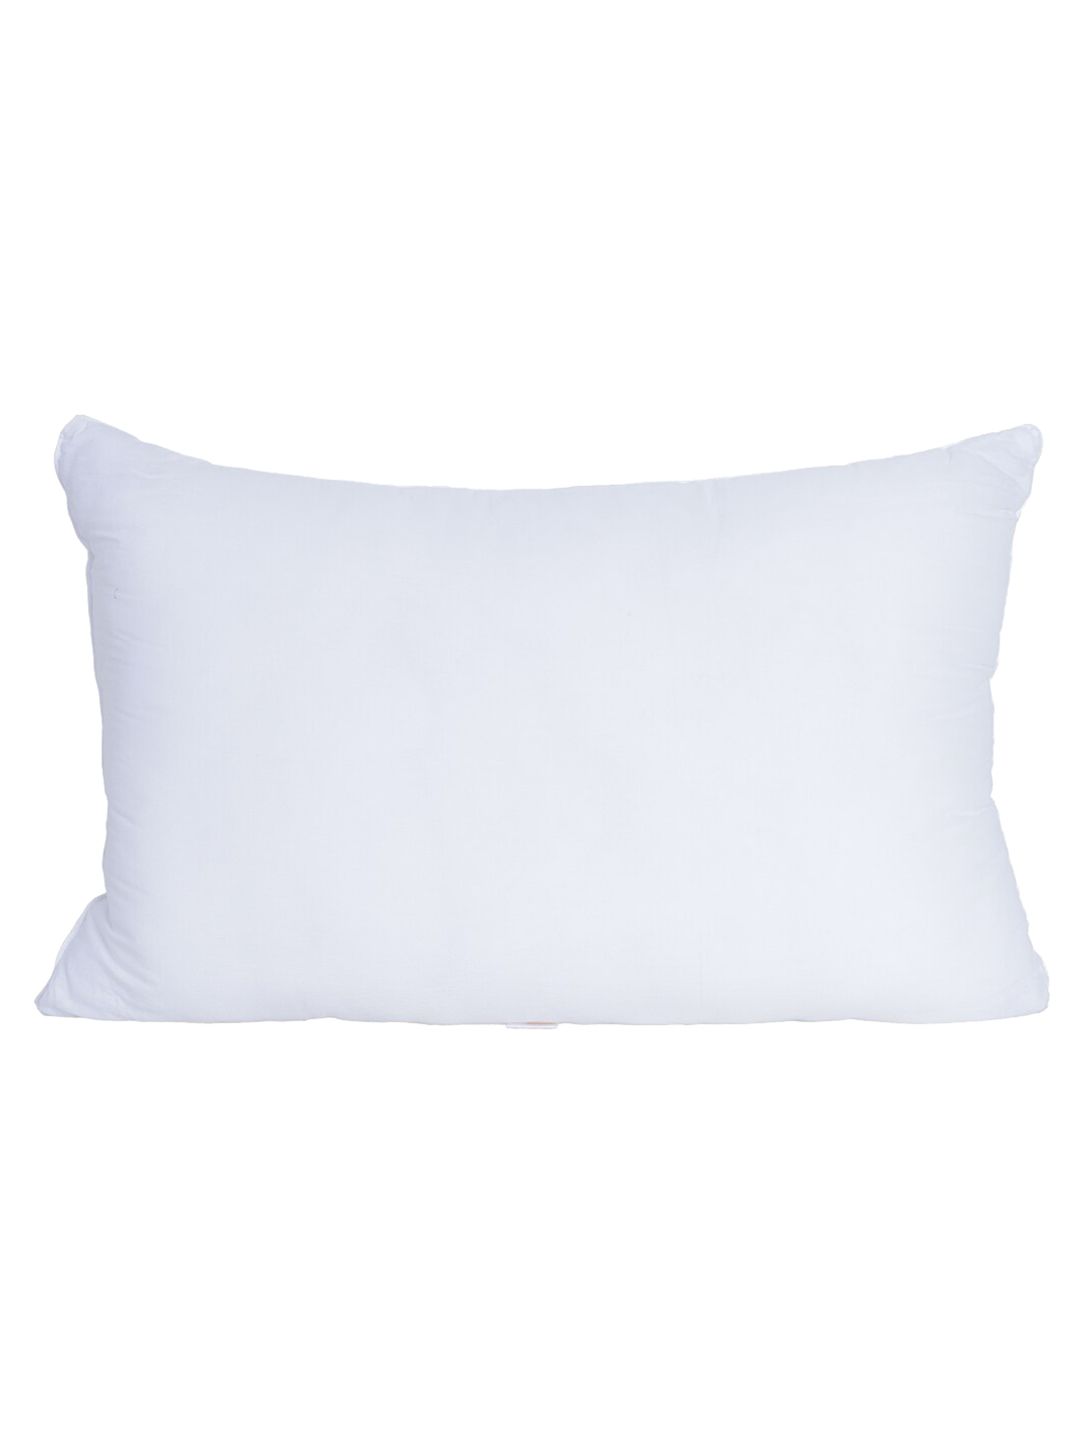 MASPAR White Solid Cotton Sleep Pillows Price in India